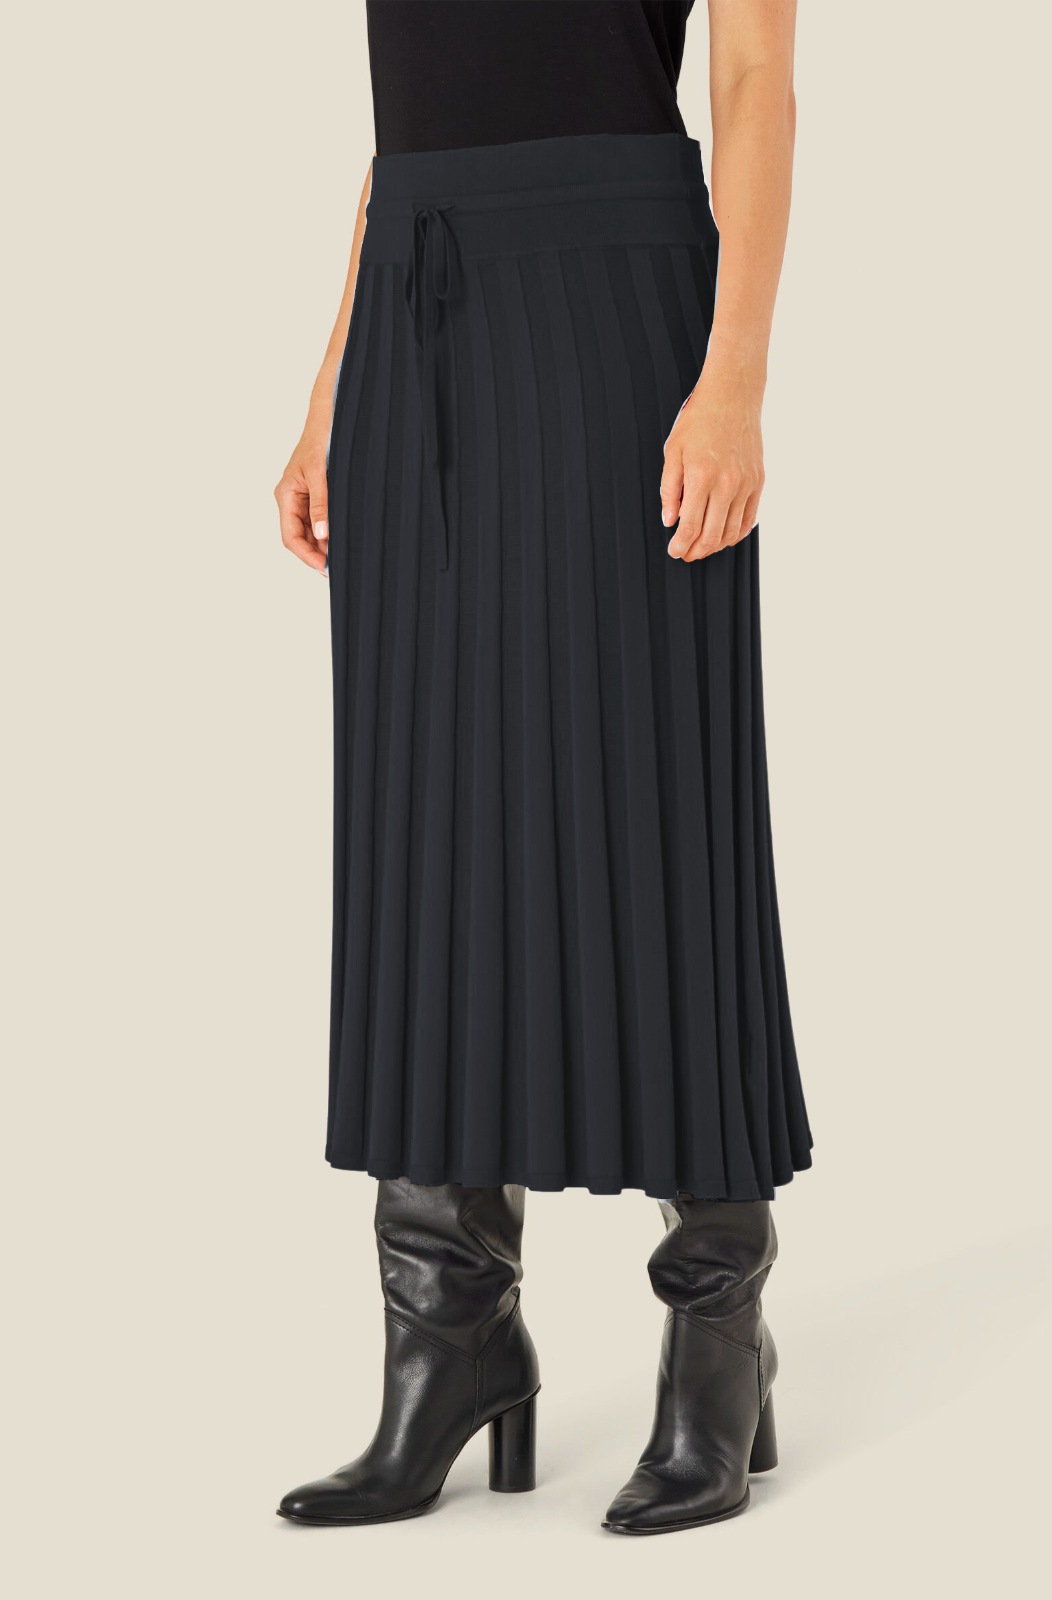 Masai Silke Knit Skirt in Black